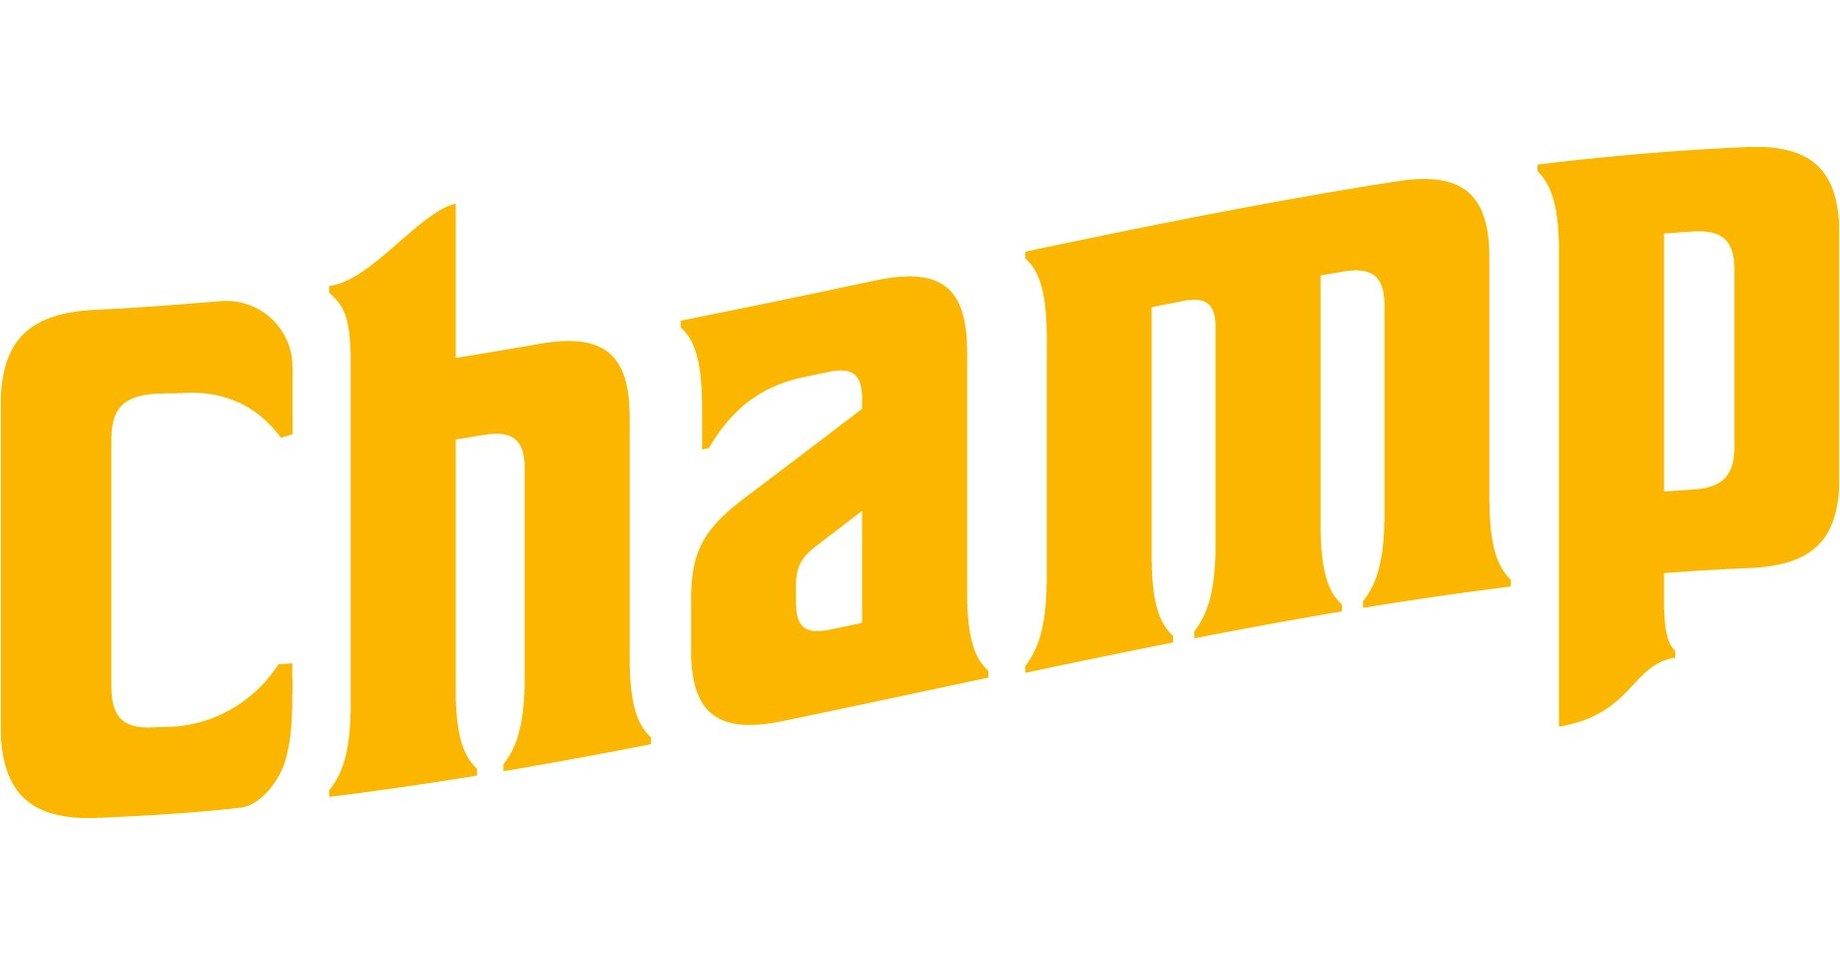 Champ sexual health logo